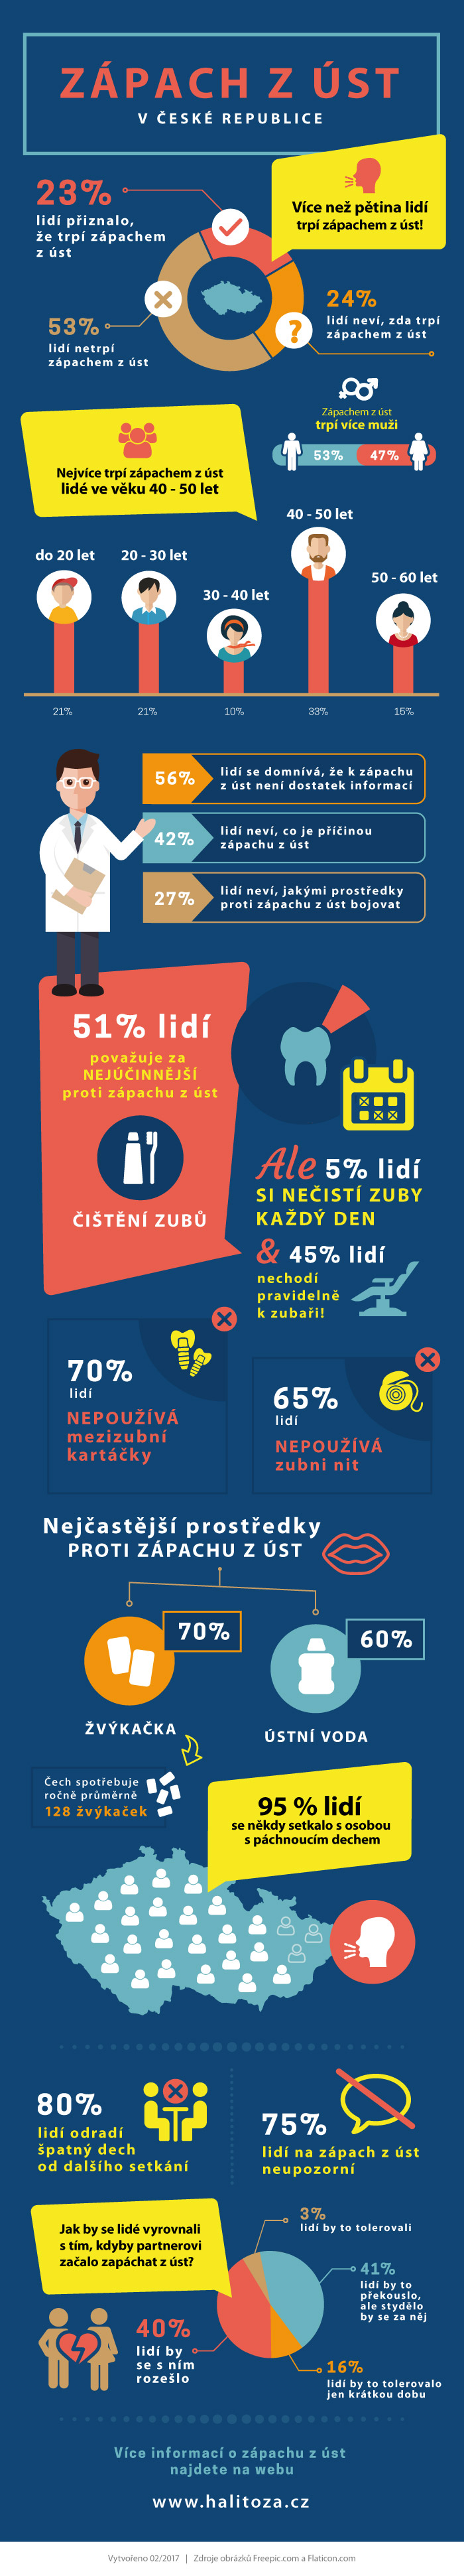 Zápach z úst v České republice - infografika, statistika, průzkum